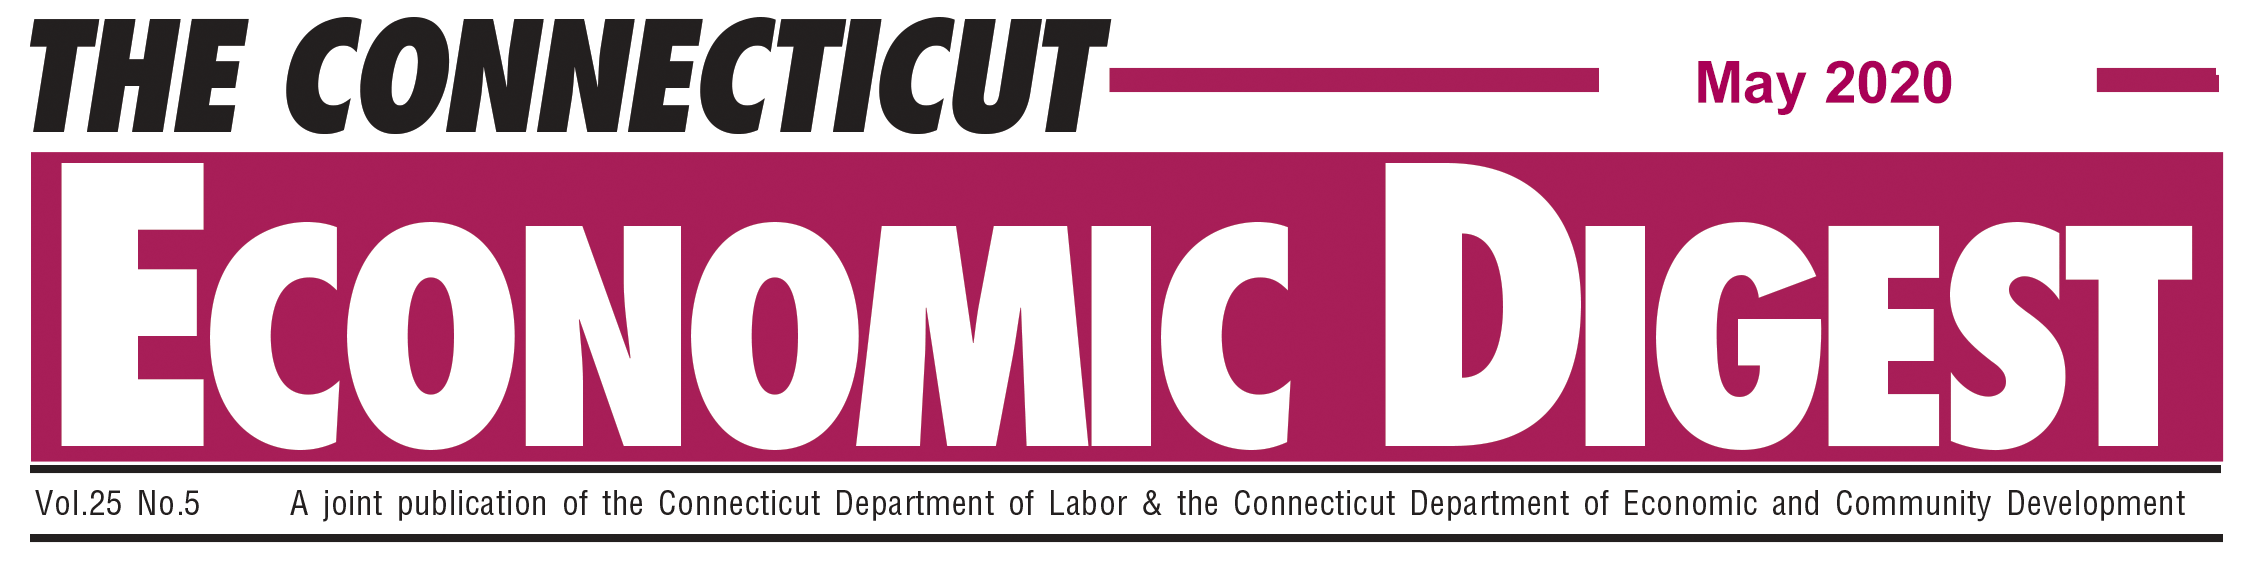 May 2020 Connecticut Economic Digest